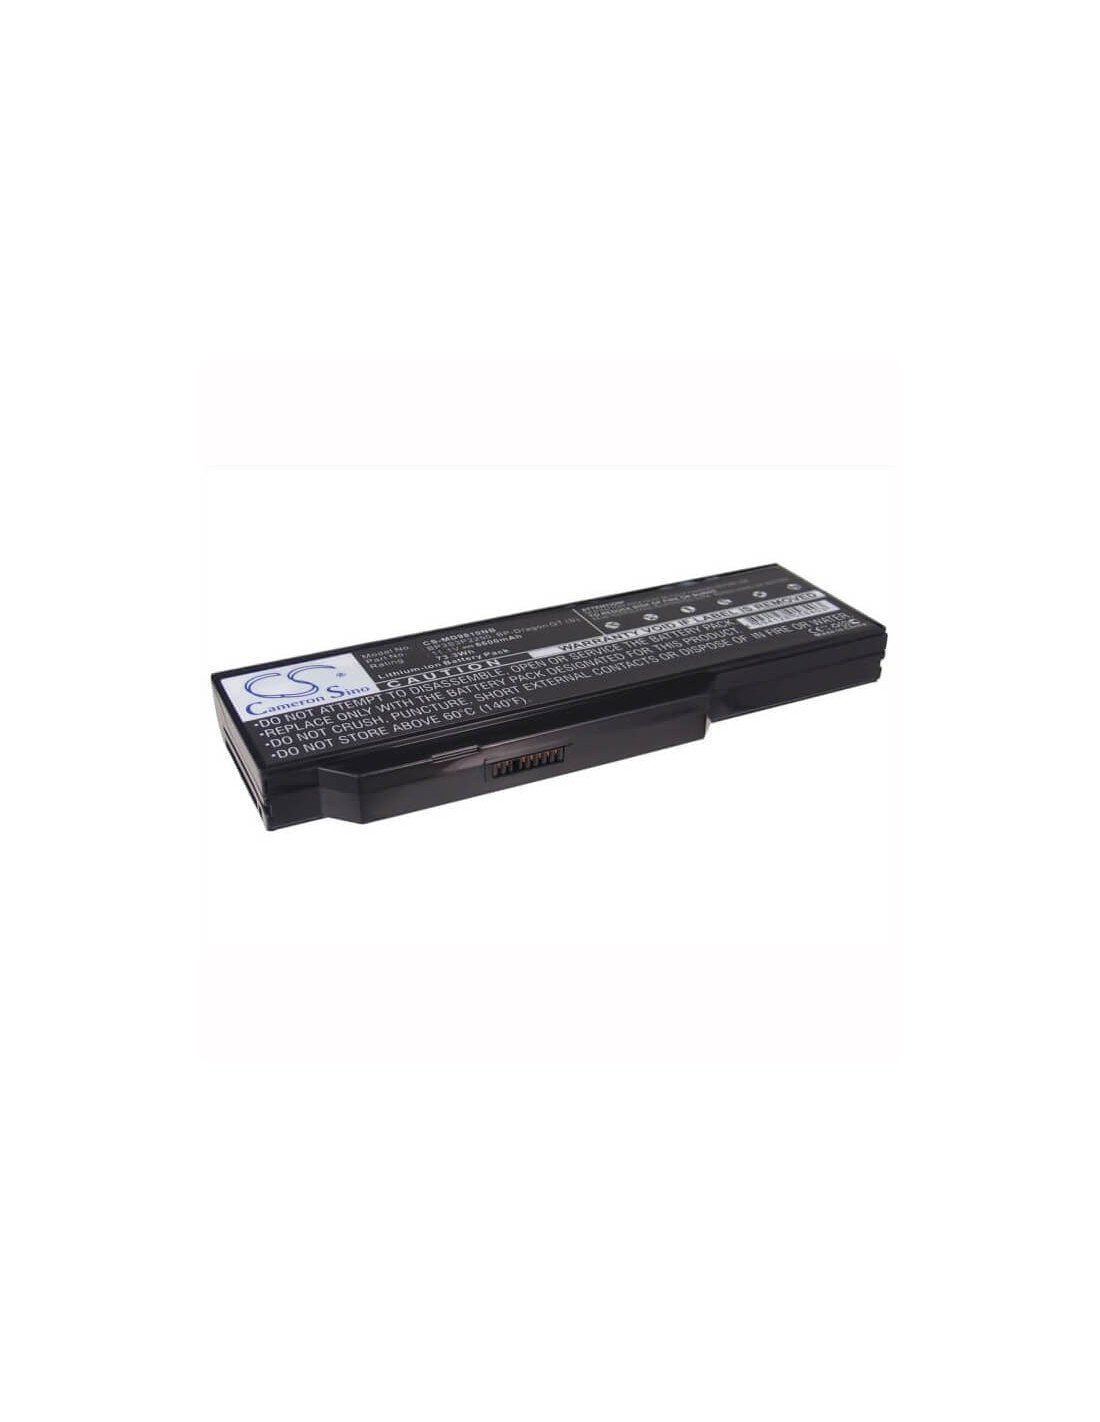 Black Battery for Medion Mim2070, Mim2240, Mim2270 11.1V, 6600mAh - 73.26Wh